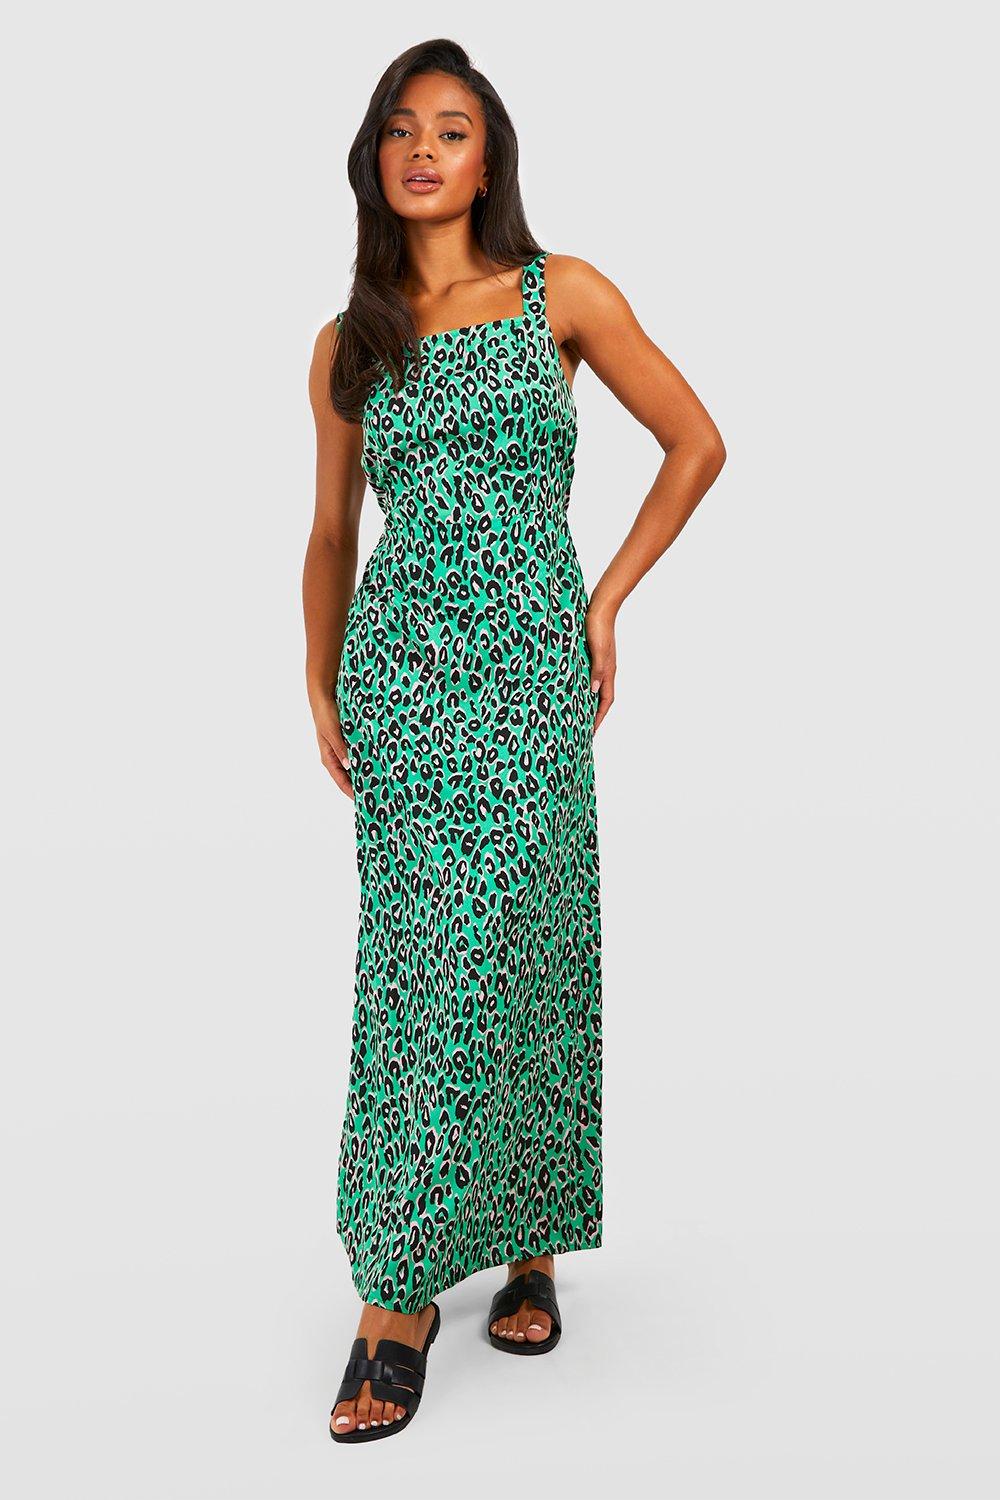 Leopard Print Strappy Maxi Dress